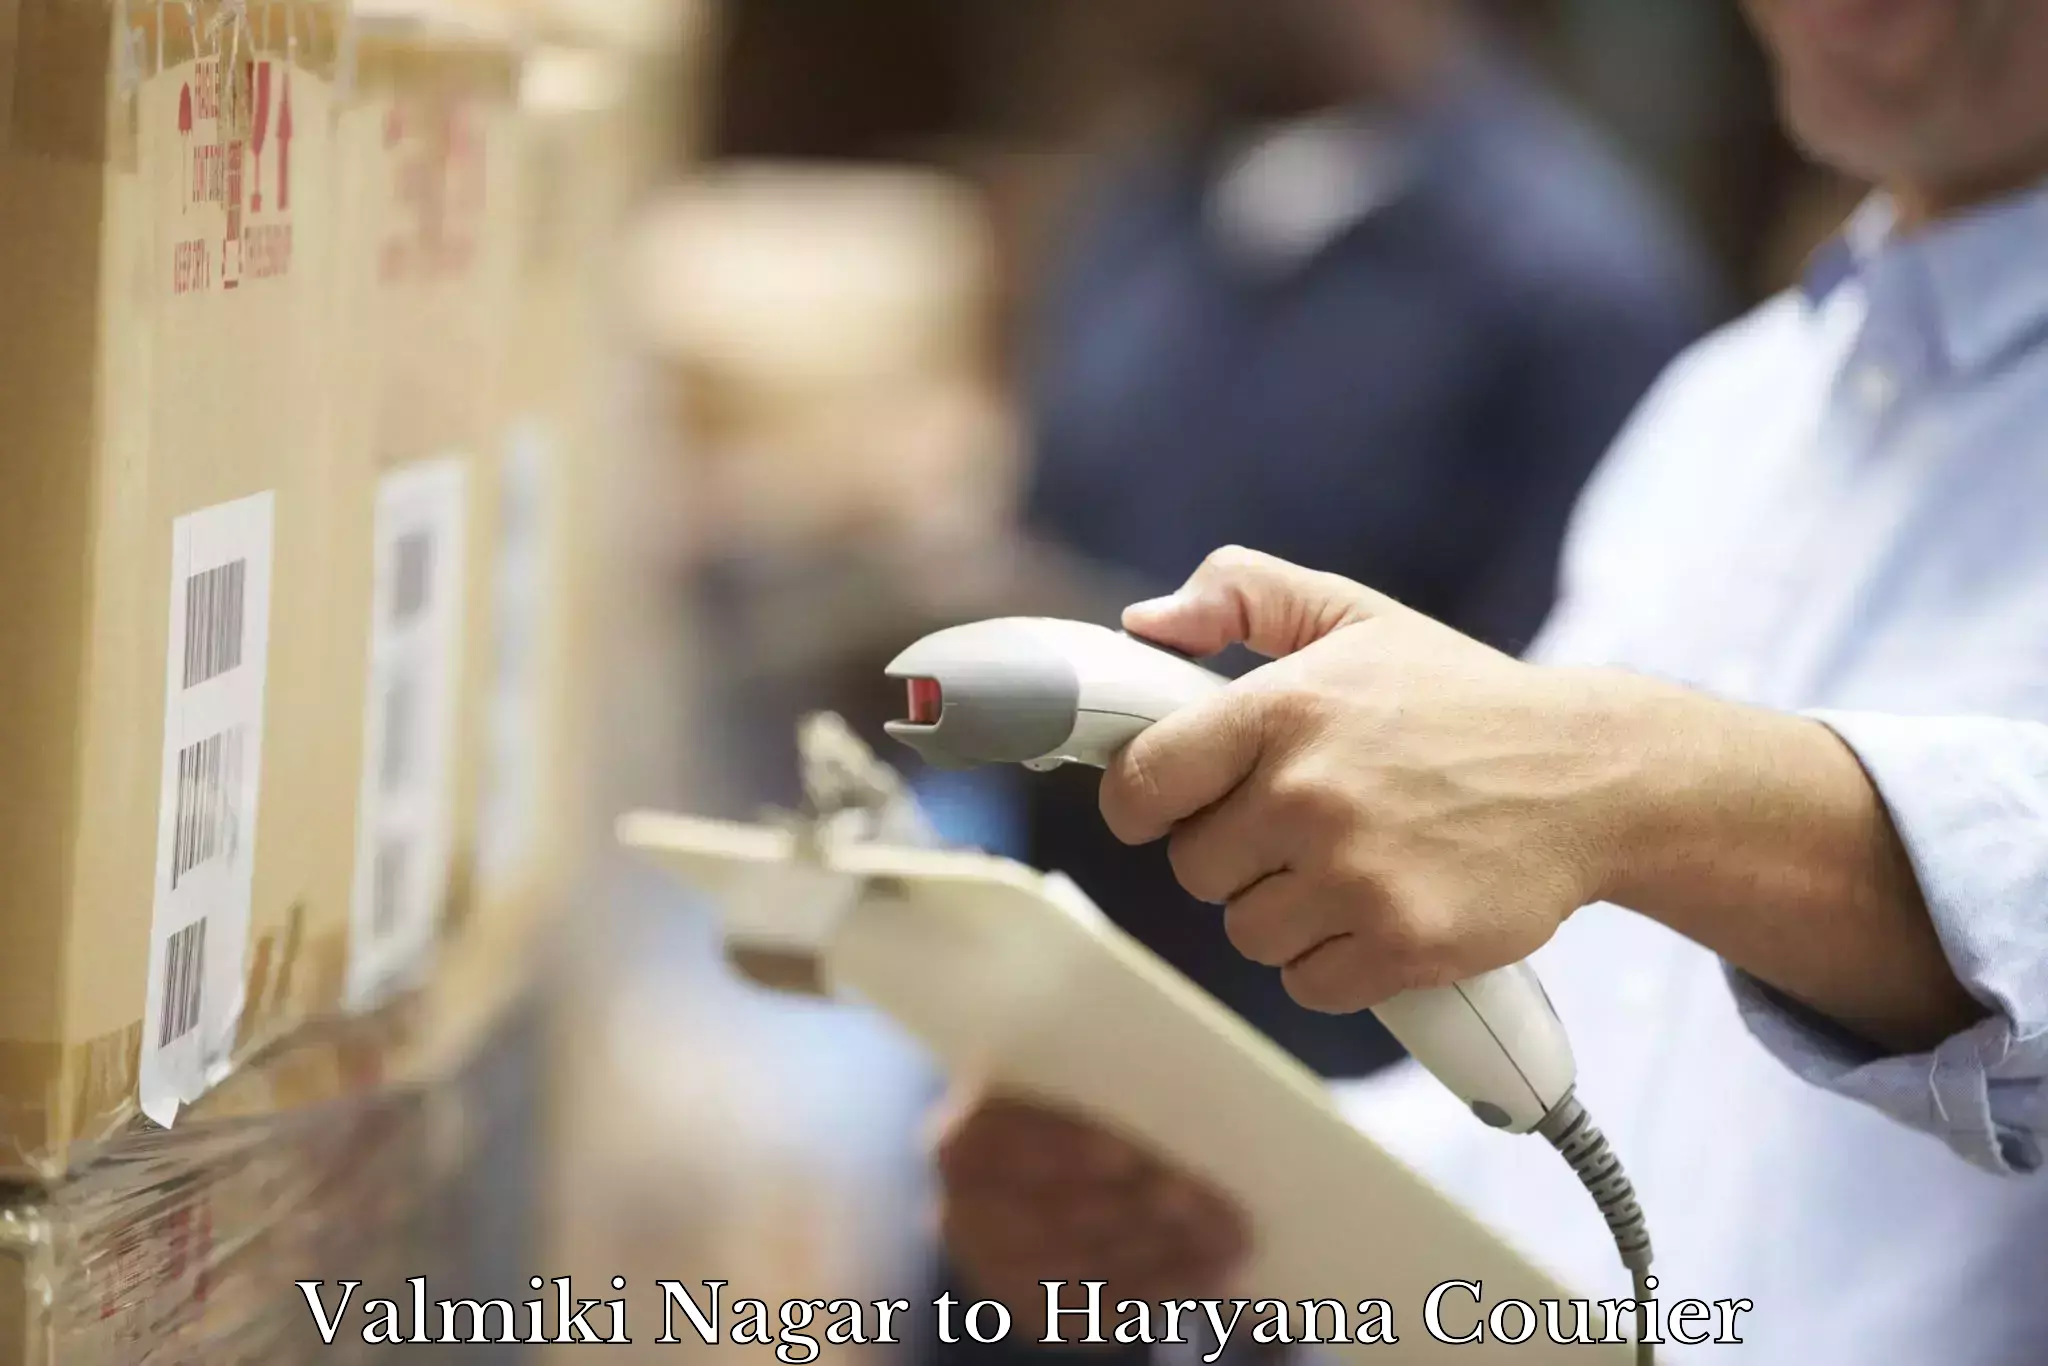 Courier service innovation Valmiki Nagar to Hansi